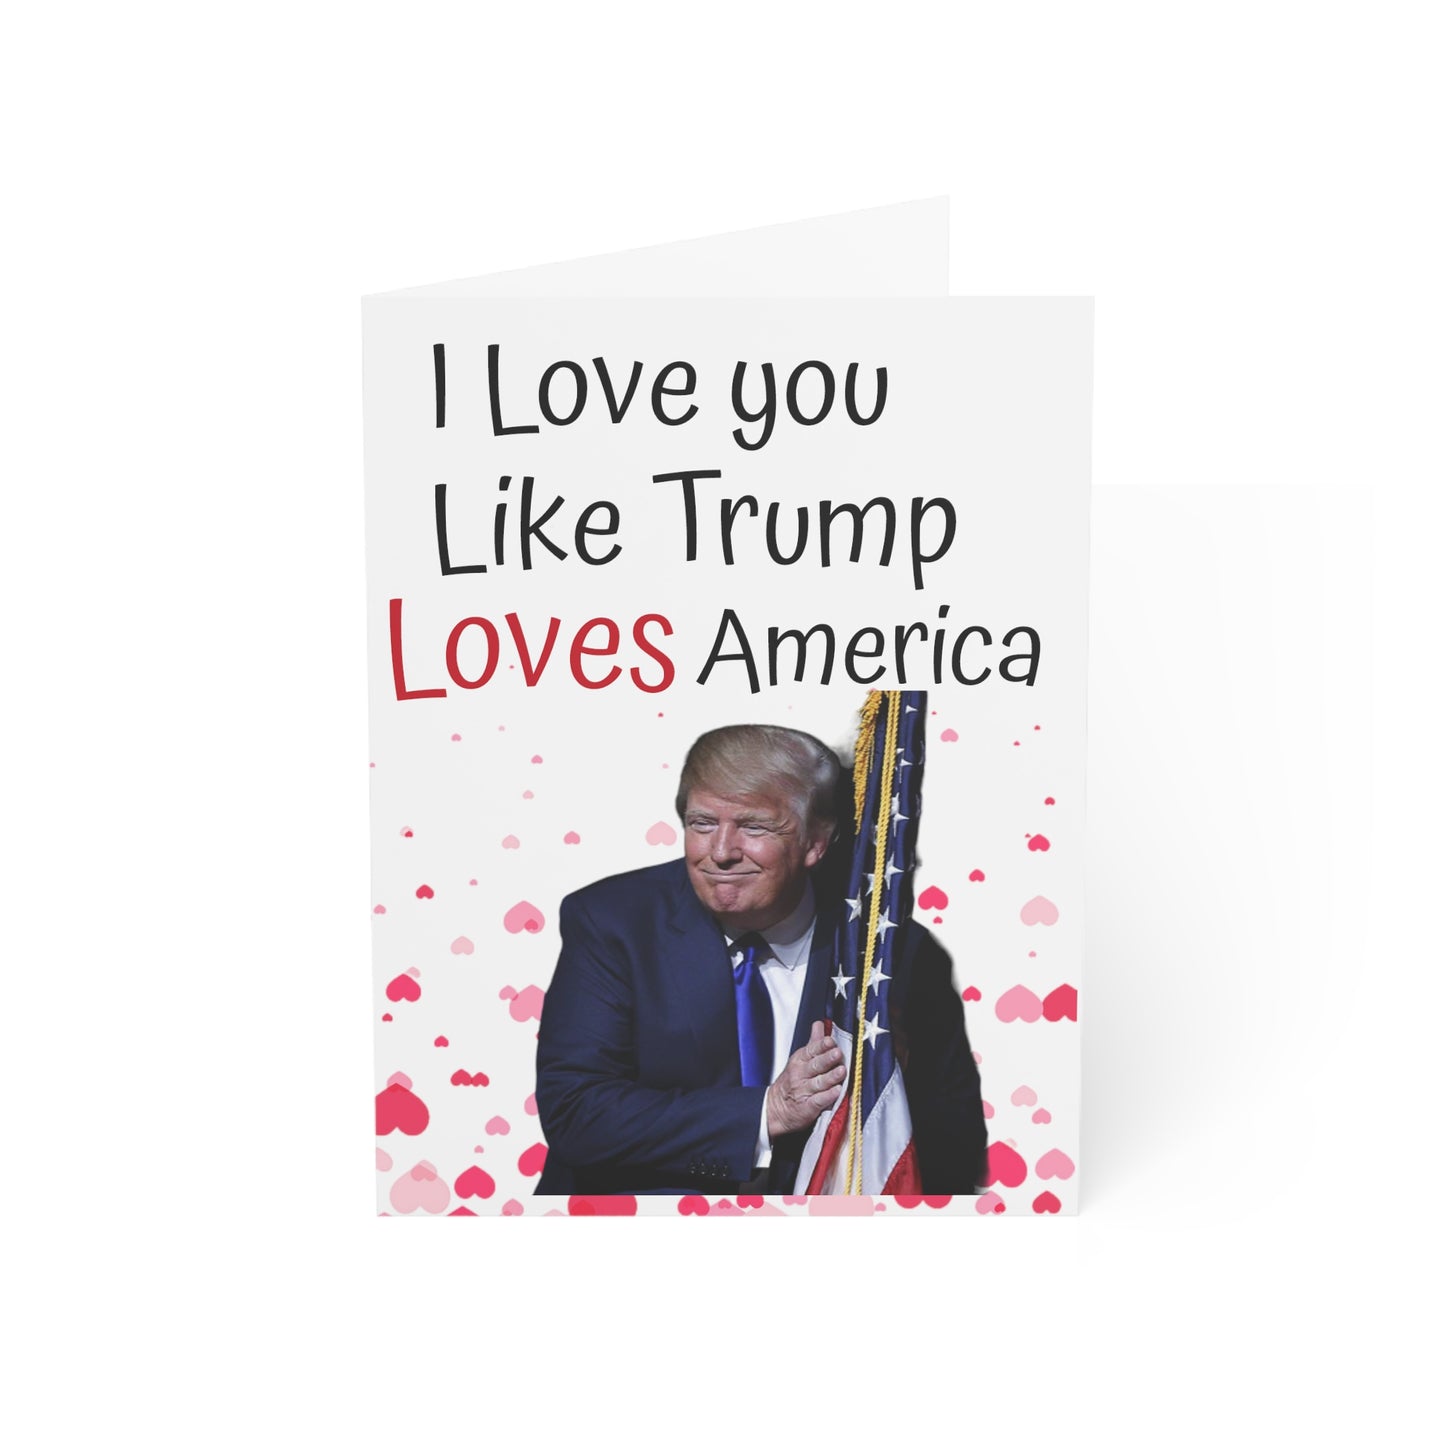 Ich liebe dich, wie Trump Amerika liebt, Jubiläums- oder Muttertagskarte